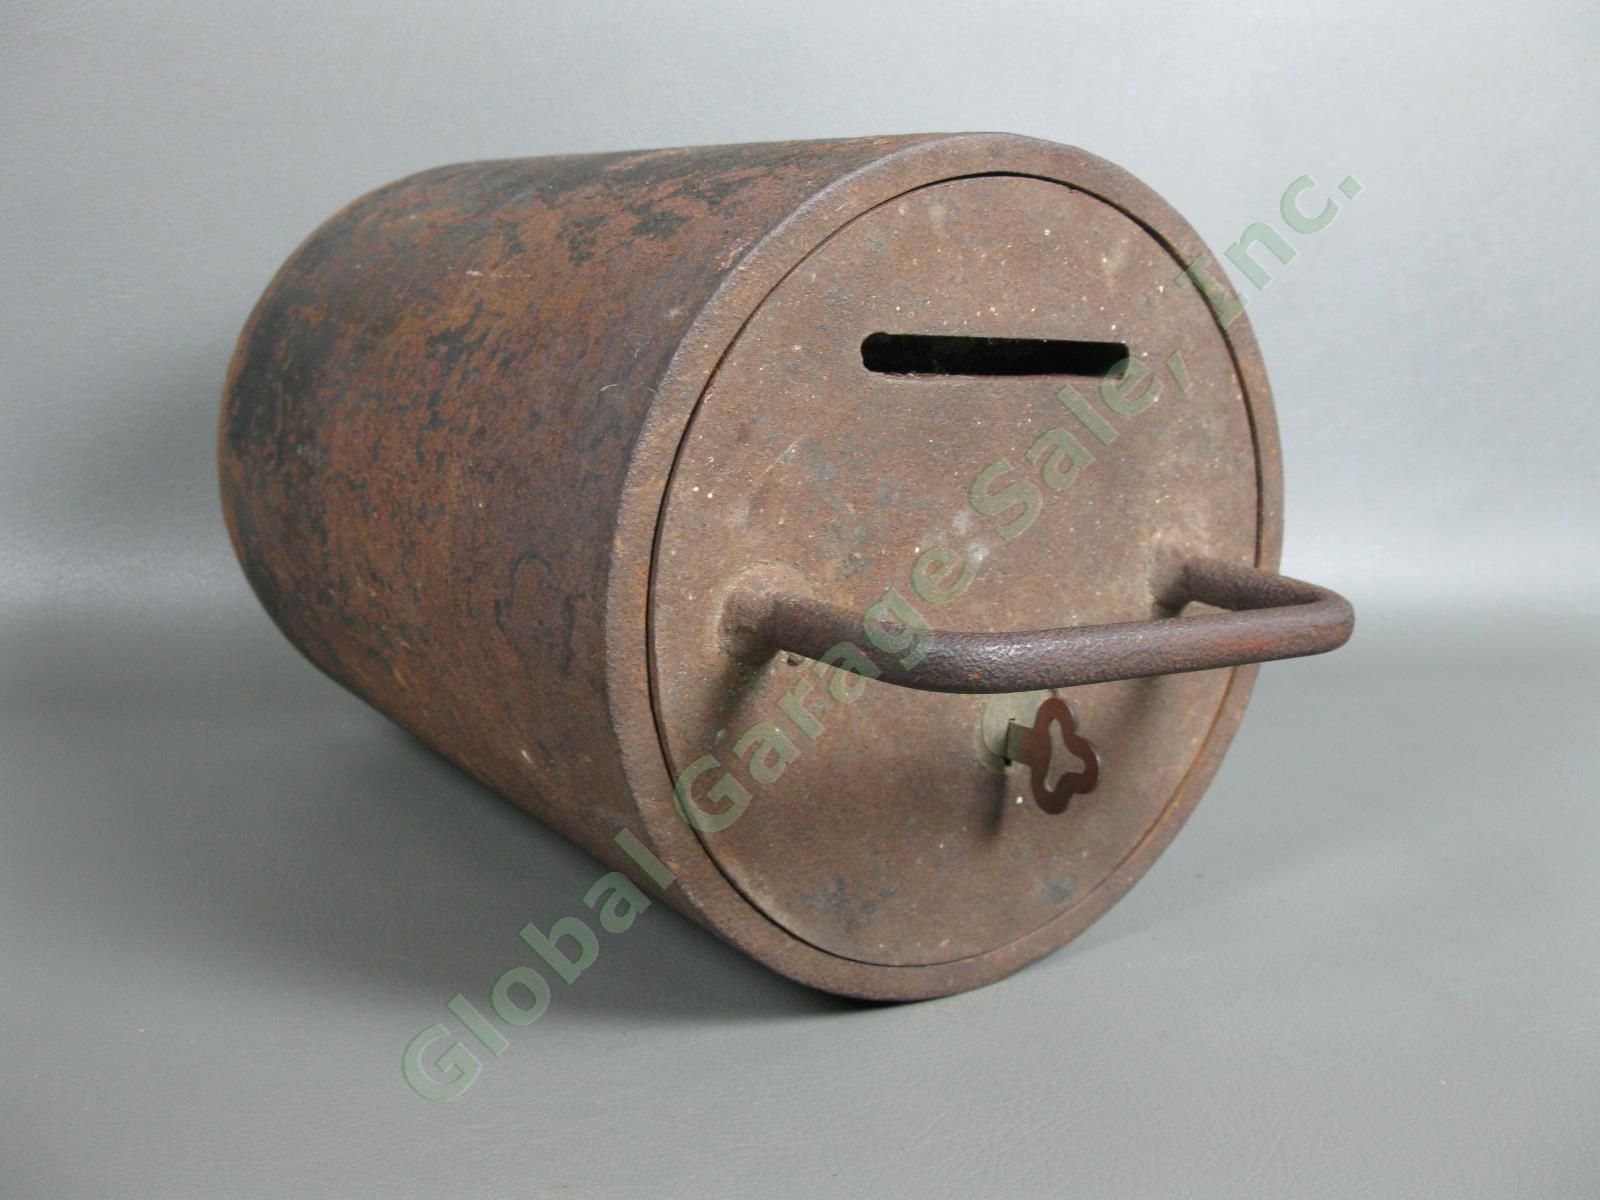 Antique Cast Iron Cylinder Ground Drop Safe Deposit Box Original Bates Lock Key